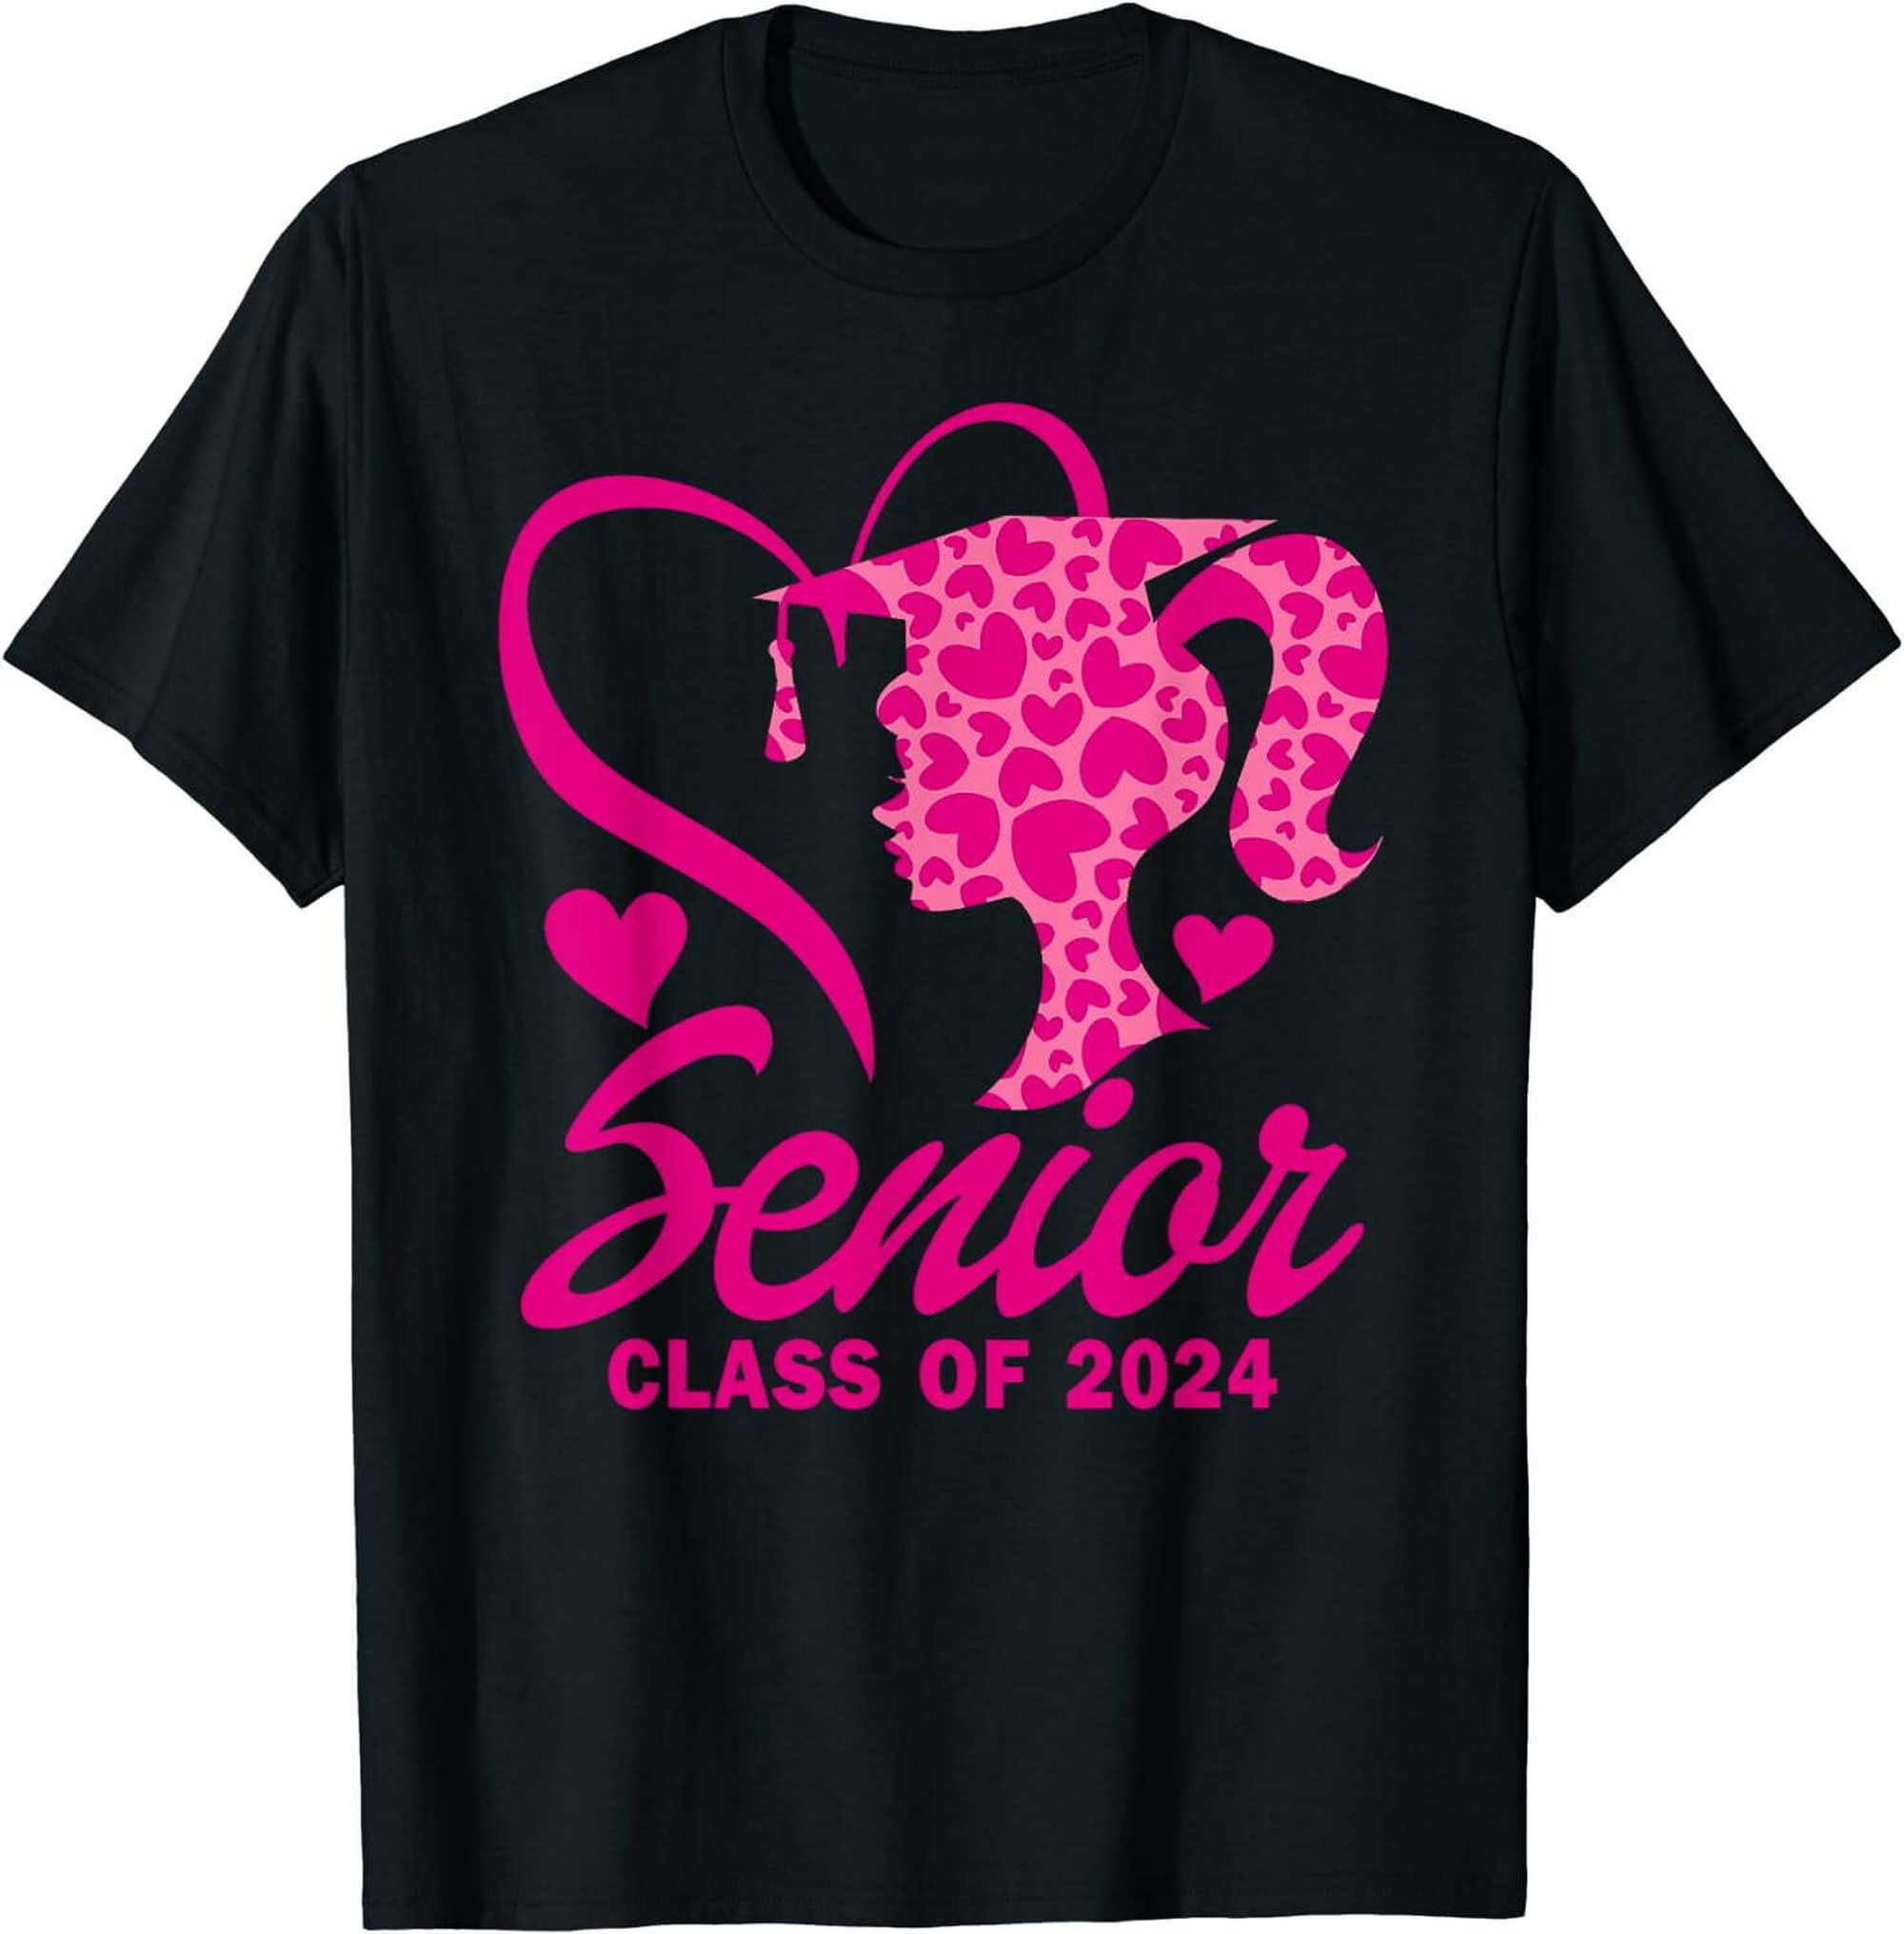 College High School Senior Class Of 2024 Funny T-Shirt Black 4X-Large ...